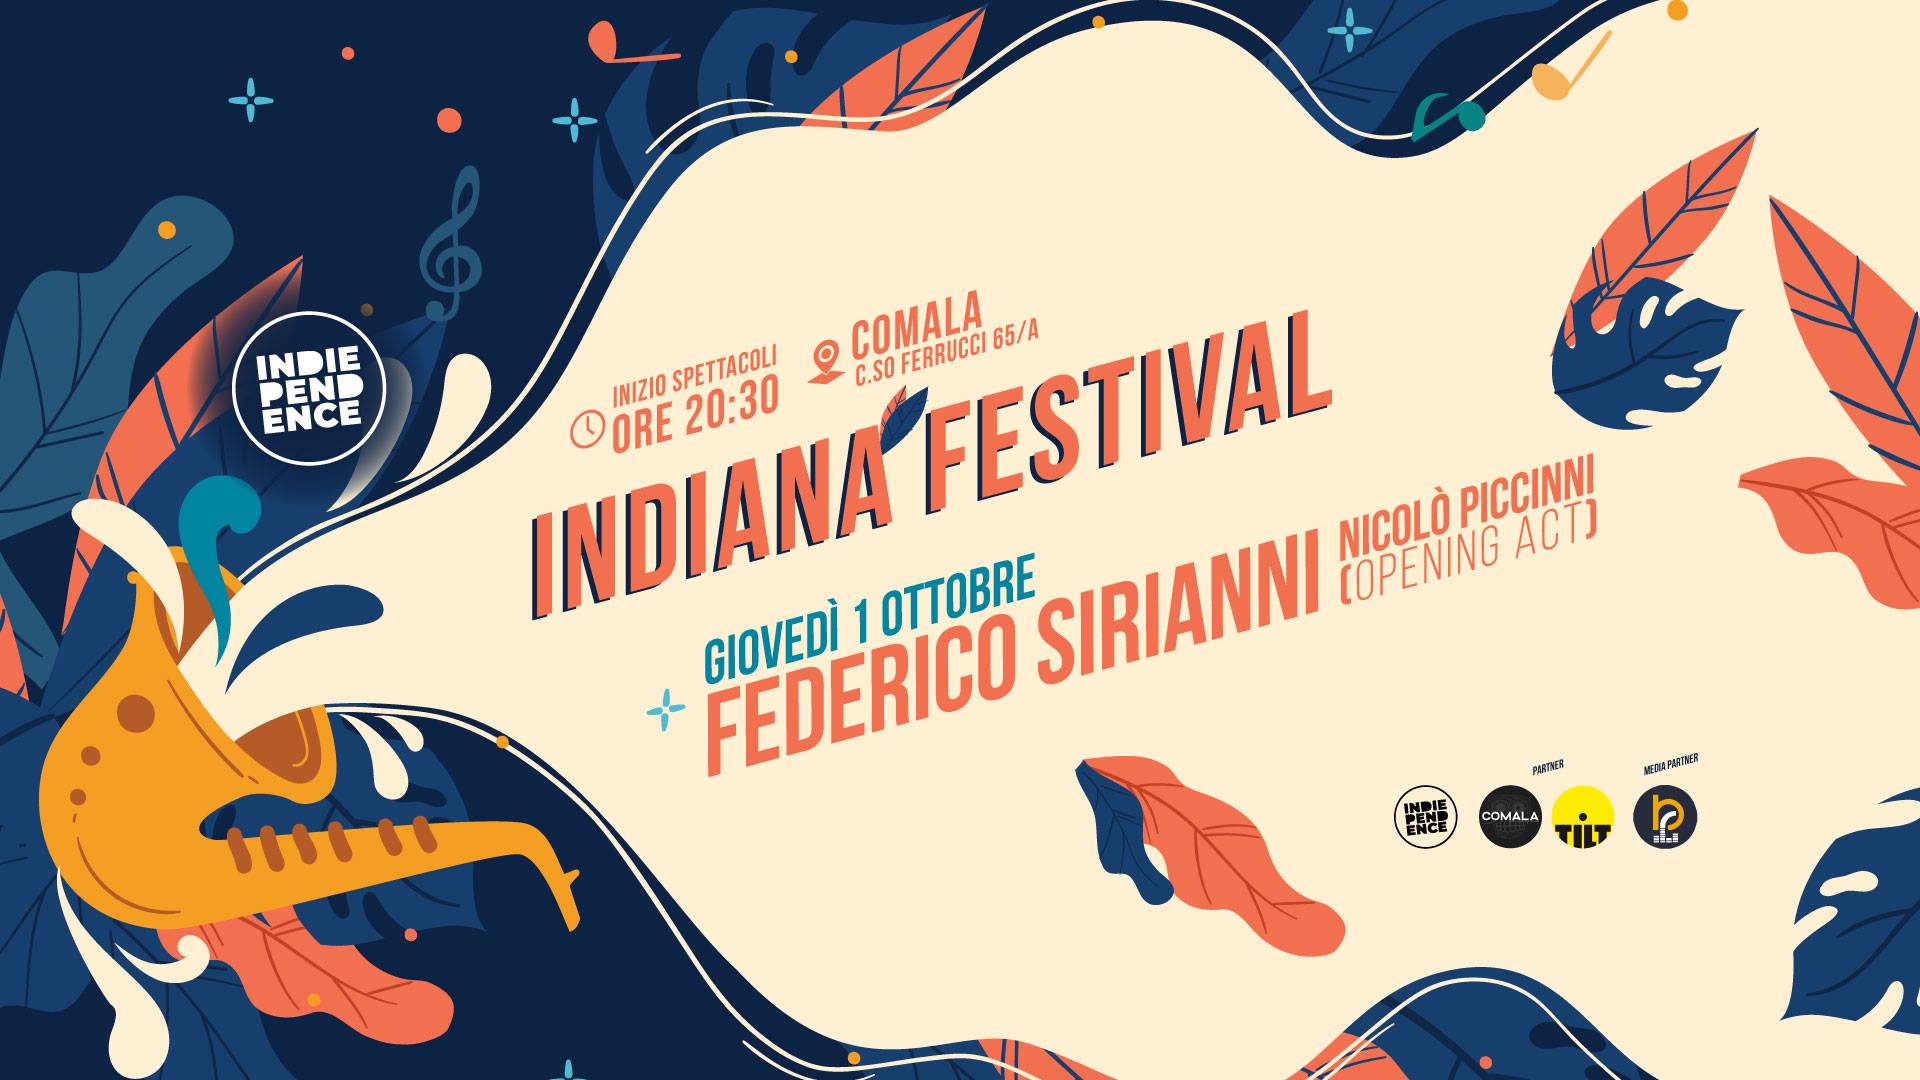 IndianaFestival #1 | Federico Sirianni (op. Piccinni)